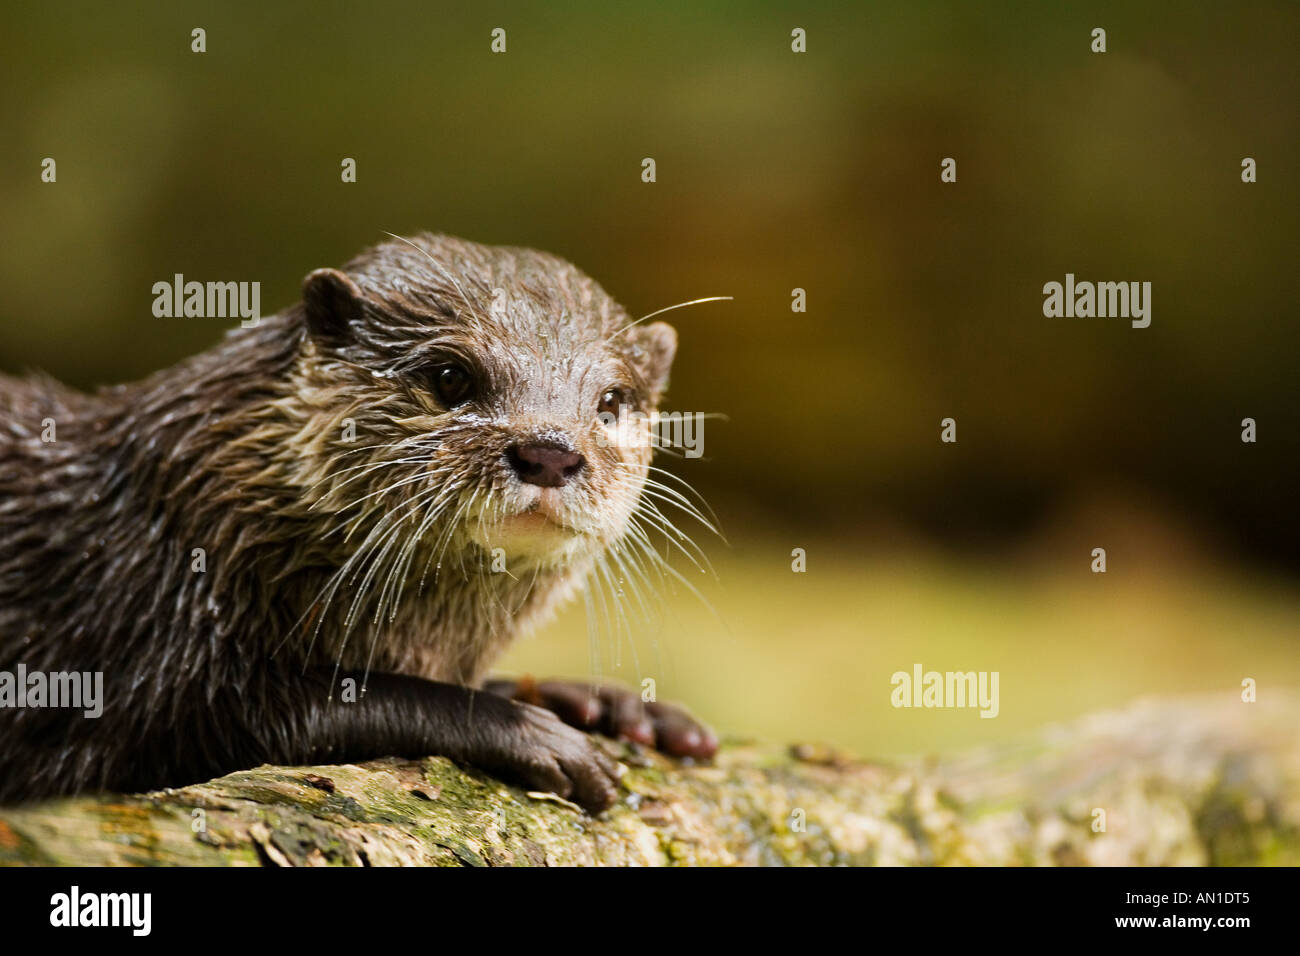 Asian short clawed short-clawed otter portrait close-up close up closeup Amblonyx Cinereus showing paws Stock Photo